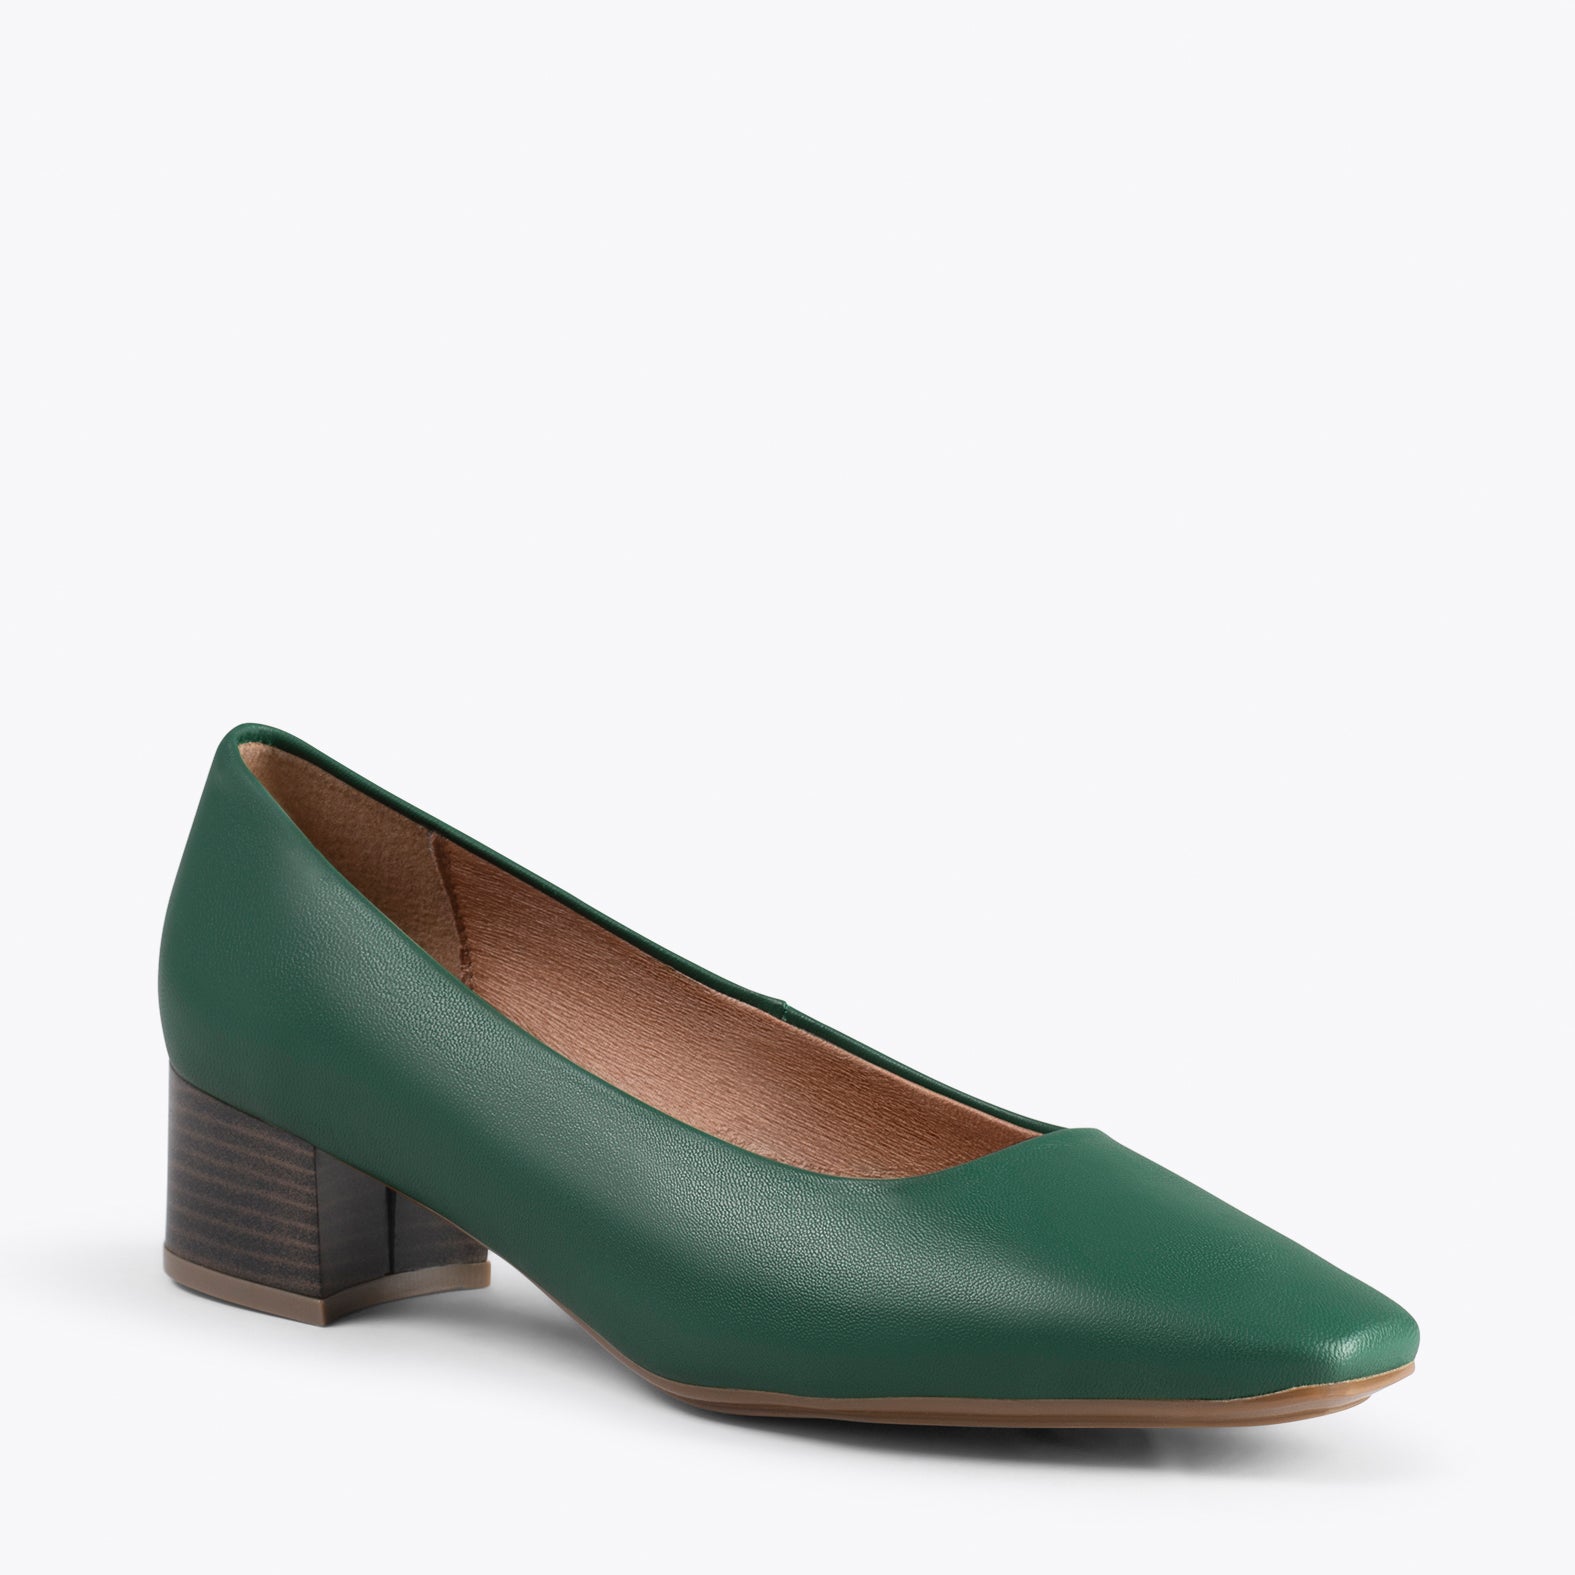 URBAN LADY – Chaussures à talon bas en cuir nappa VERT BOUTEILLE